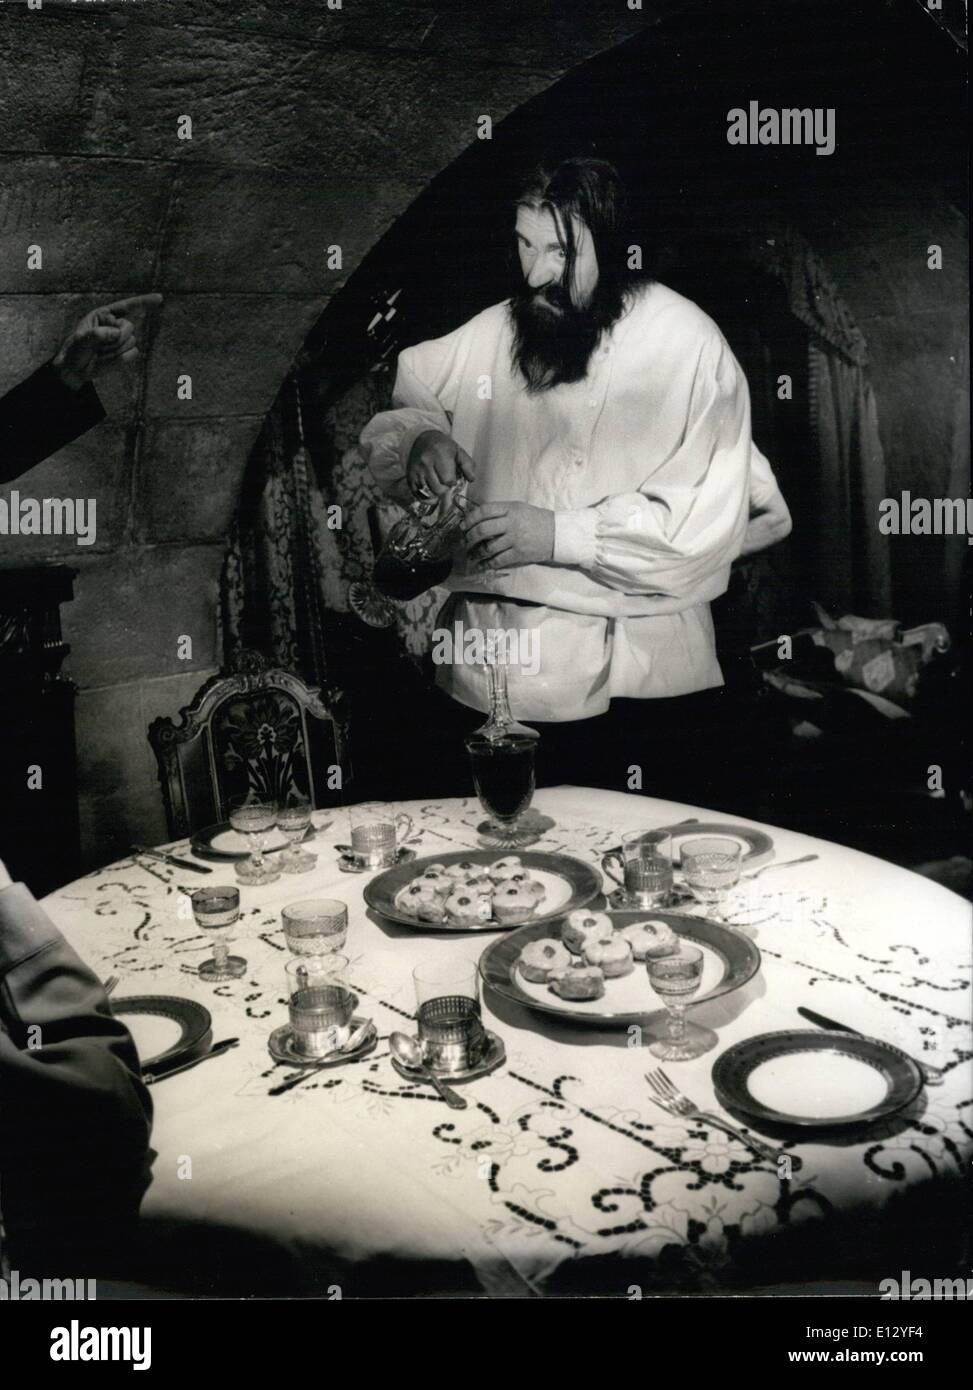 Febrero 26, 2012 - Rasputin desempeñado por Gert Froebe. Foto de stock